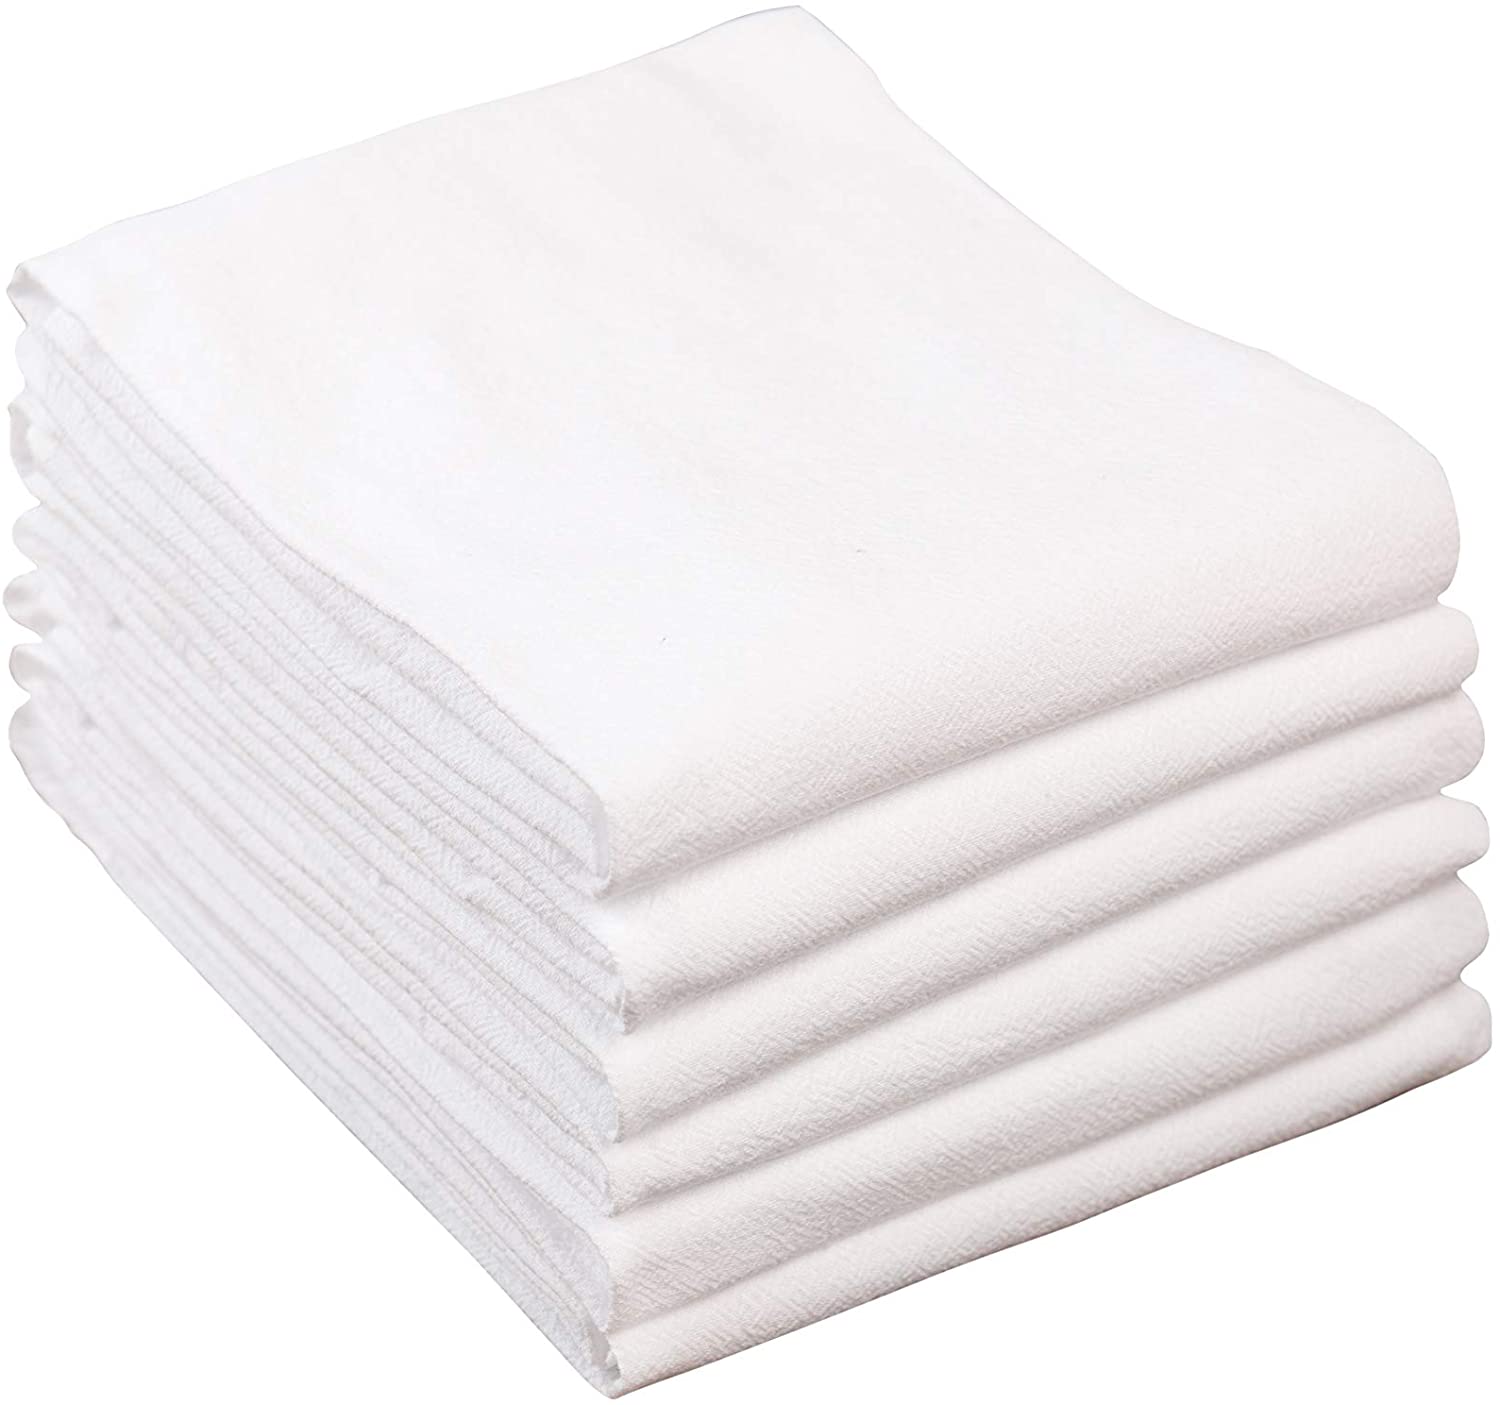 Merry Christmas Black Flour Sack Towel – T and K Designs